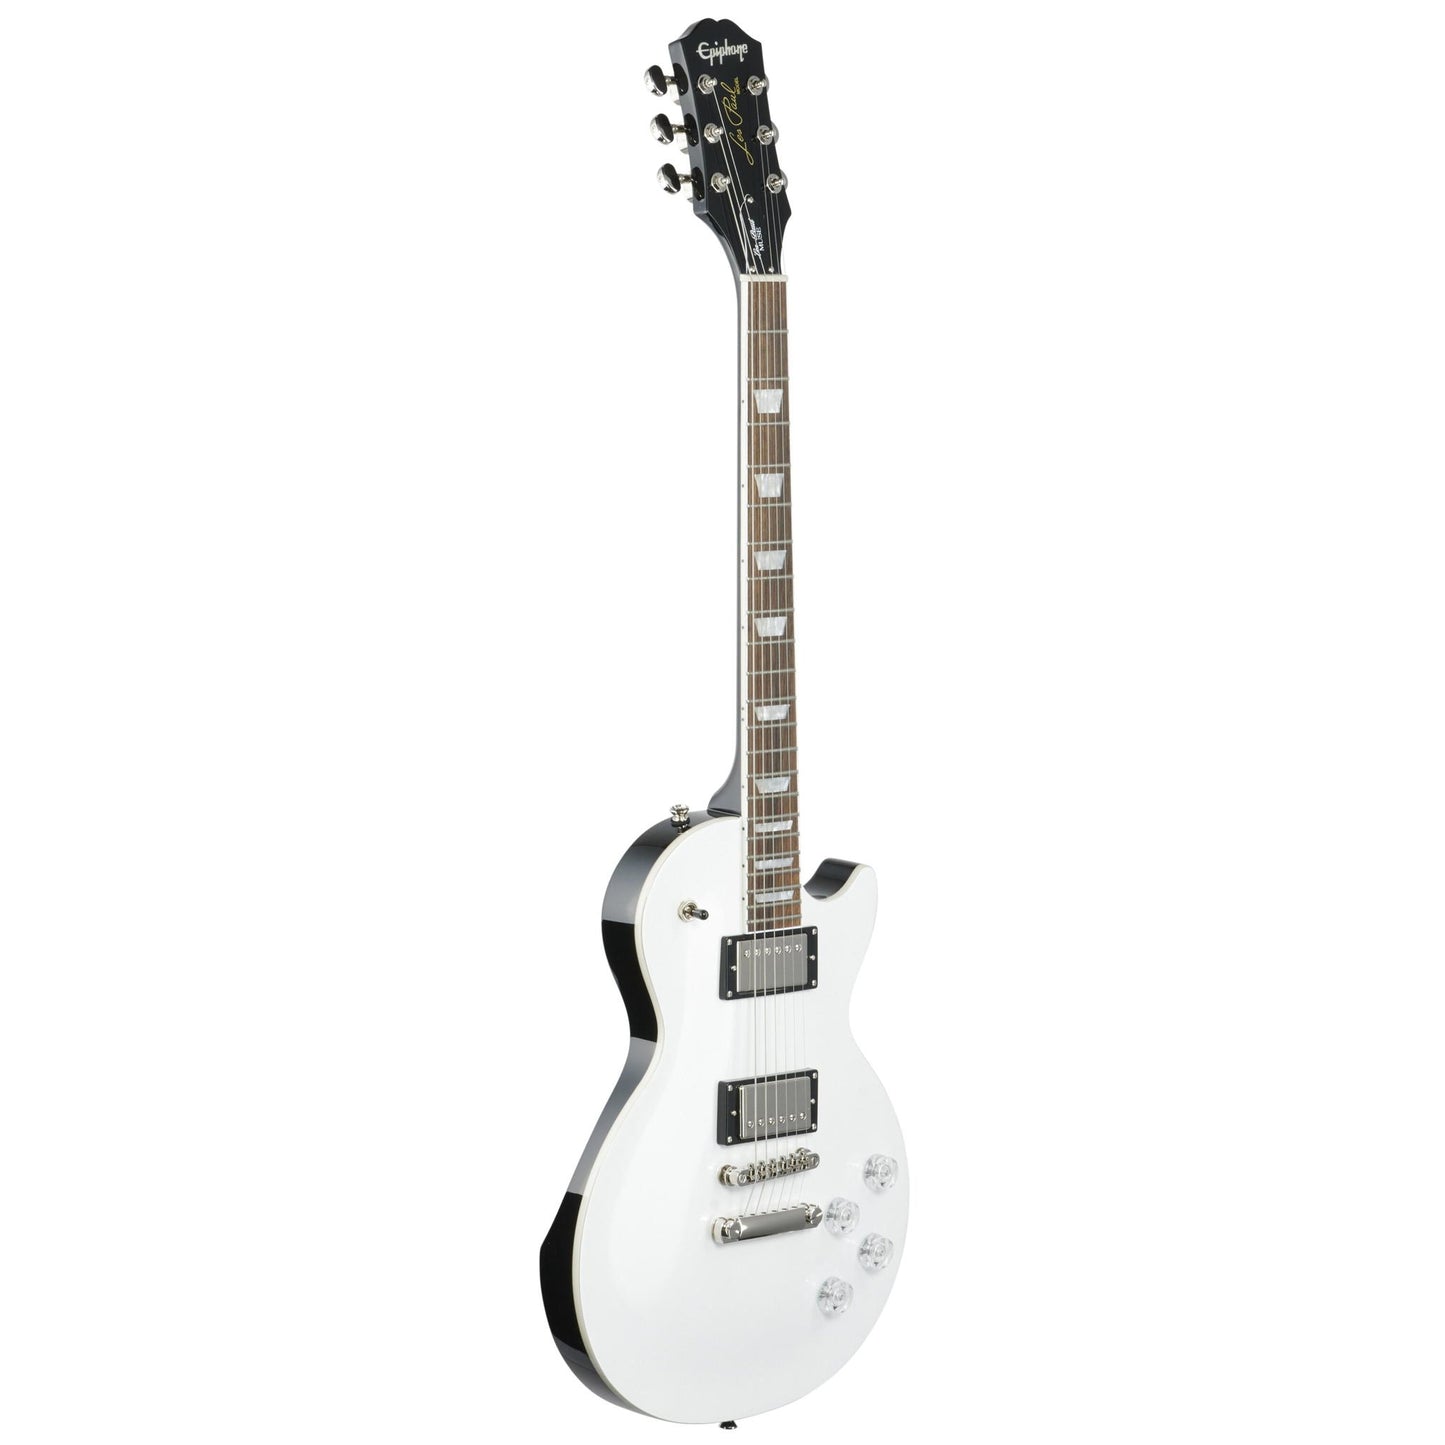 Epiphone Les Paul Muse Electric Guitar, Pearl White Metallic